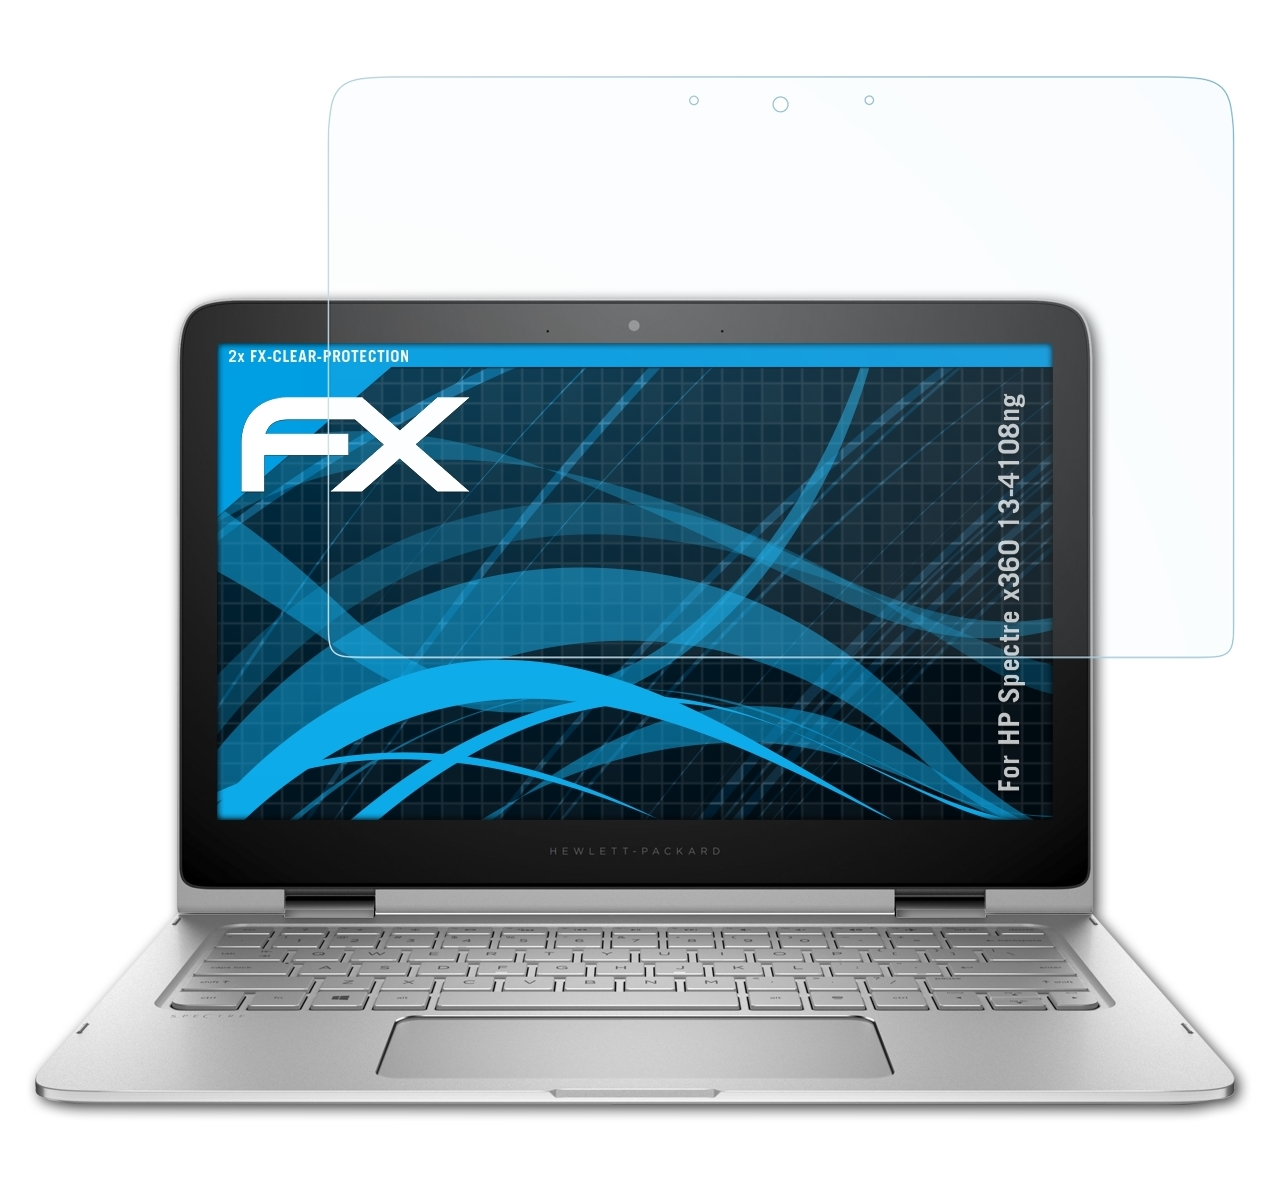 ATFOLIX 2x HP Displayschutz(für Spectre x360 FX-Clear 13-4108ng)